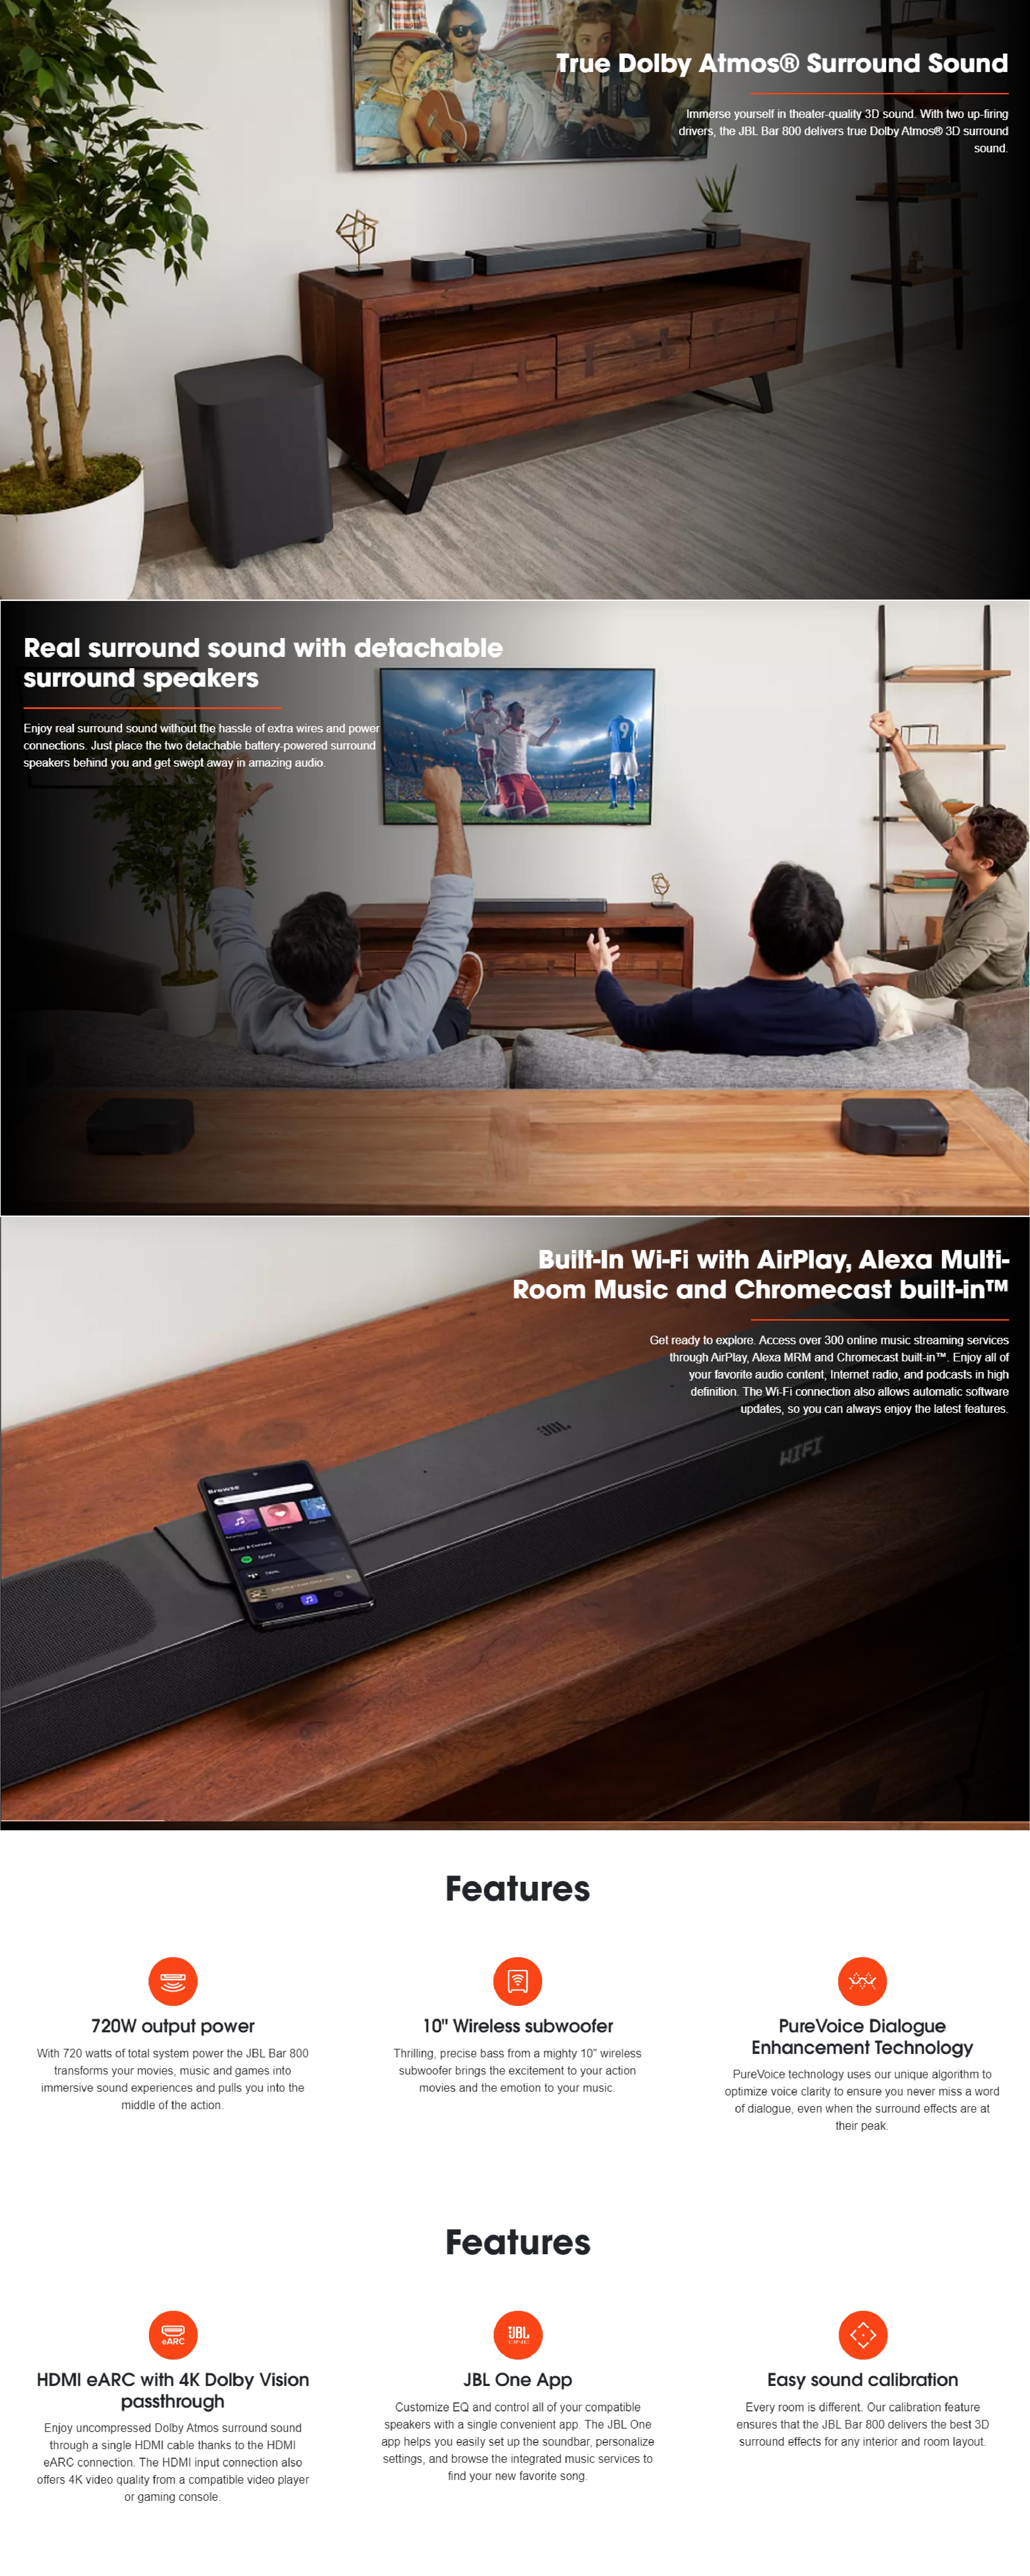 JBL Bar 800 5.1.2 Channel soundbar with Dolby Atmos 3D surround sound